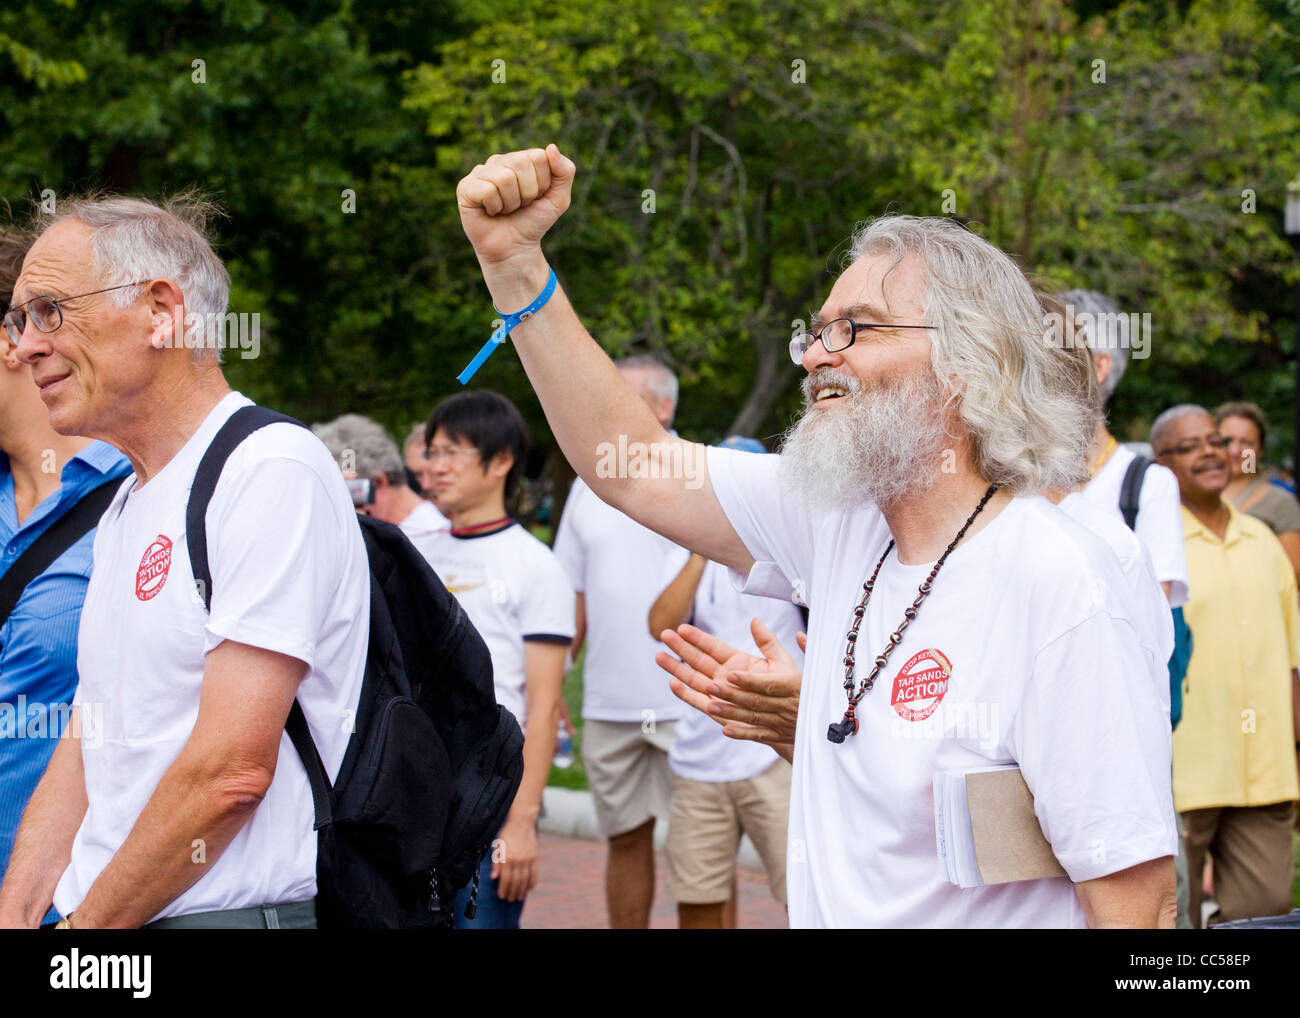 An elderly protester raises his fist Stock Photo